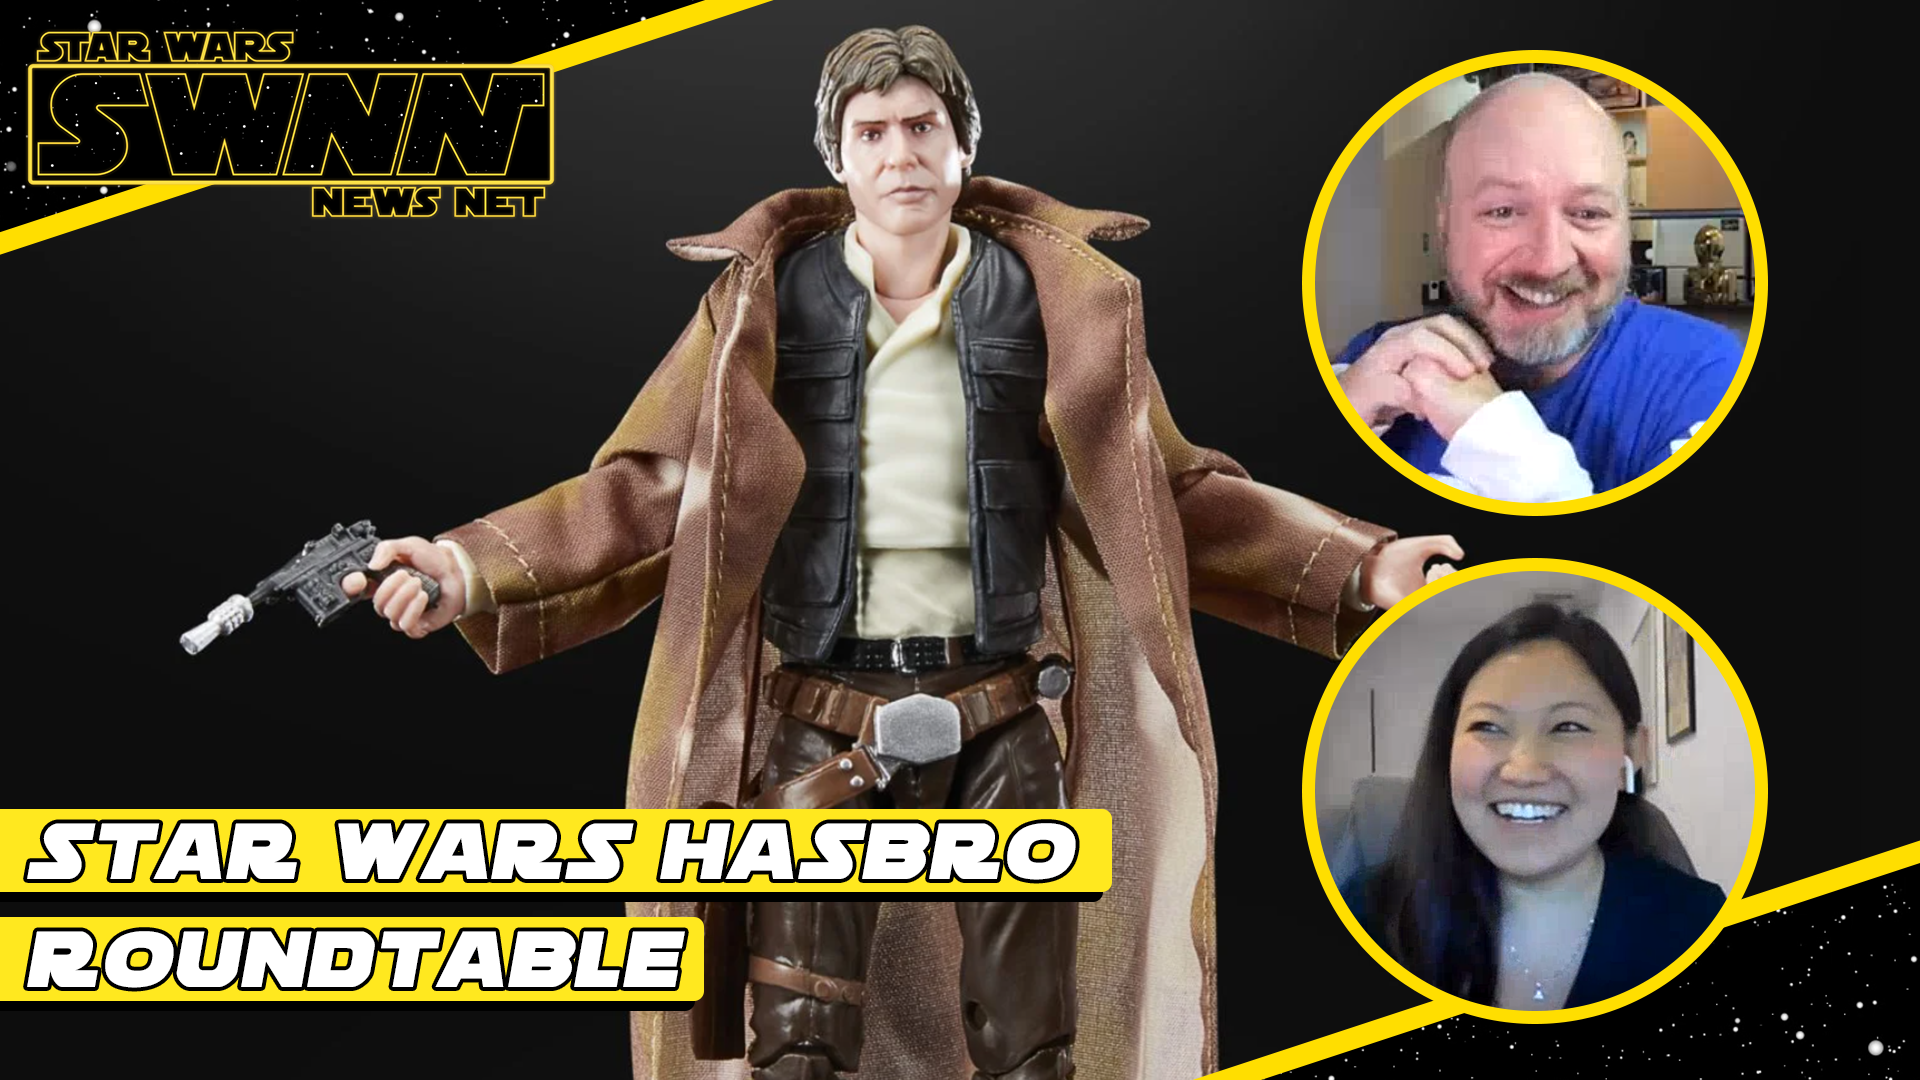 Star Wars Hasbro Roundtable